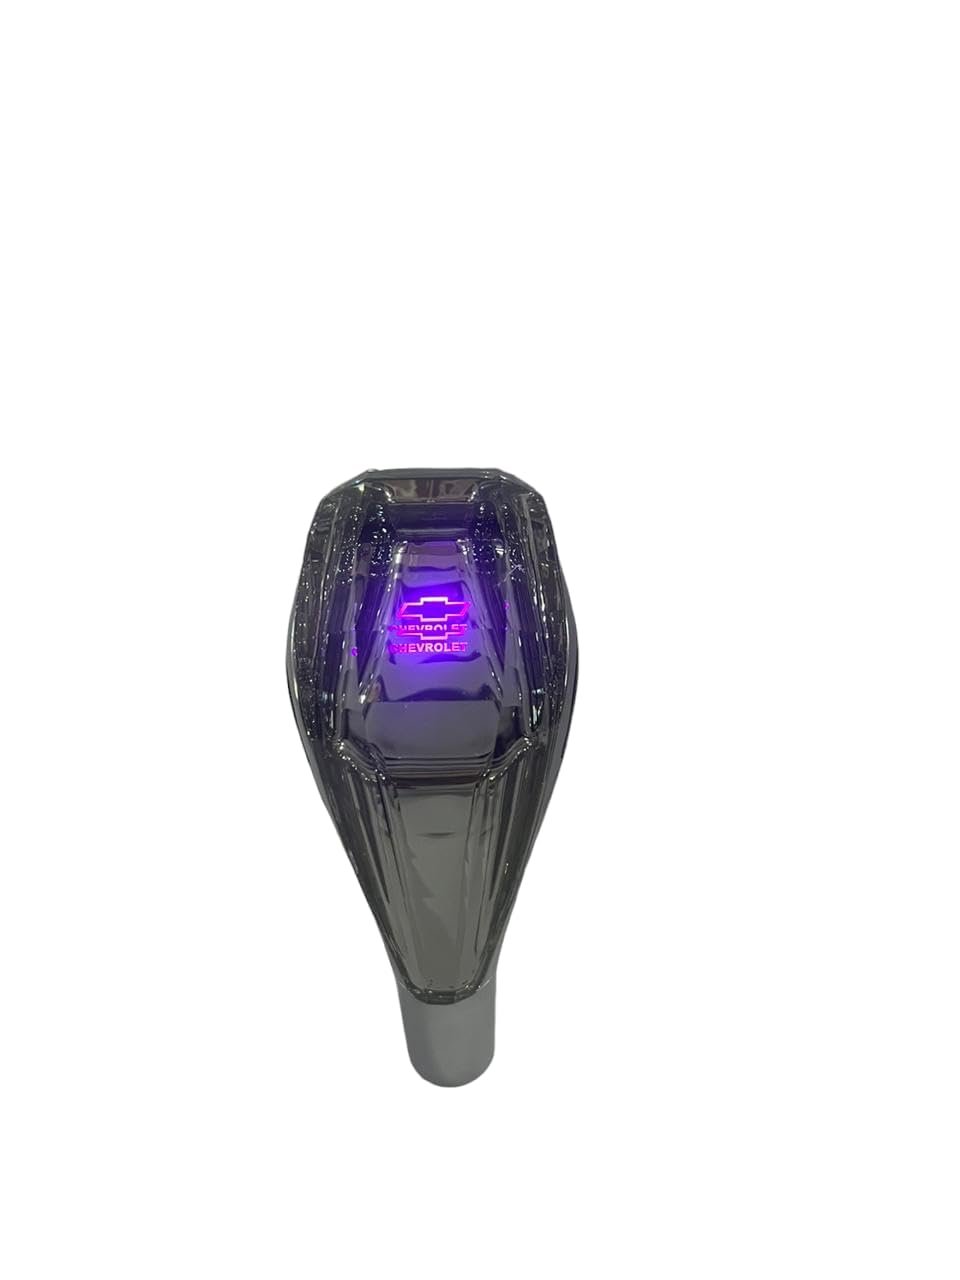 Crystal Shape Car LED Handball Crystal Shift Knob Shift Lever 7 Color Lights Illumination Touch Sensor Line Lighting Compatible with C-hevrolet Car Image 